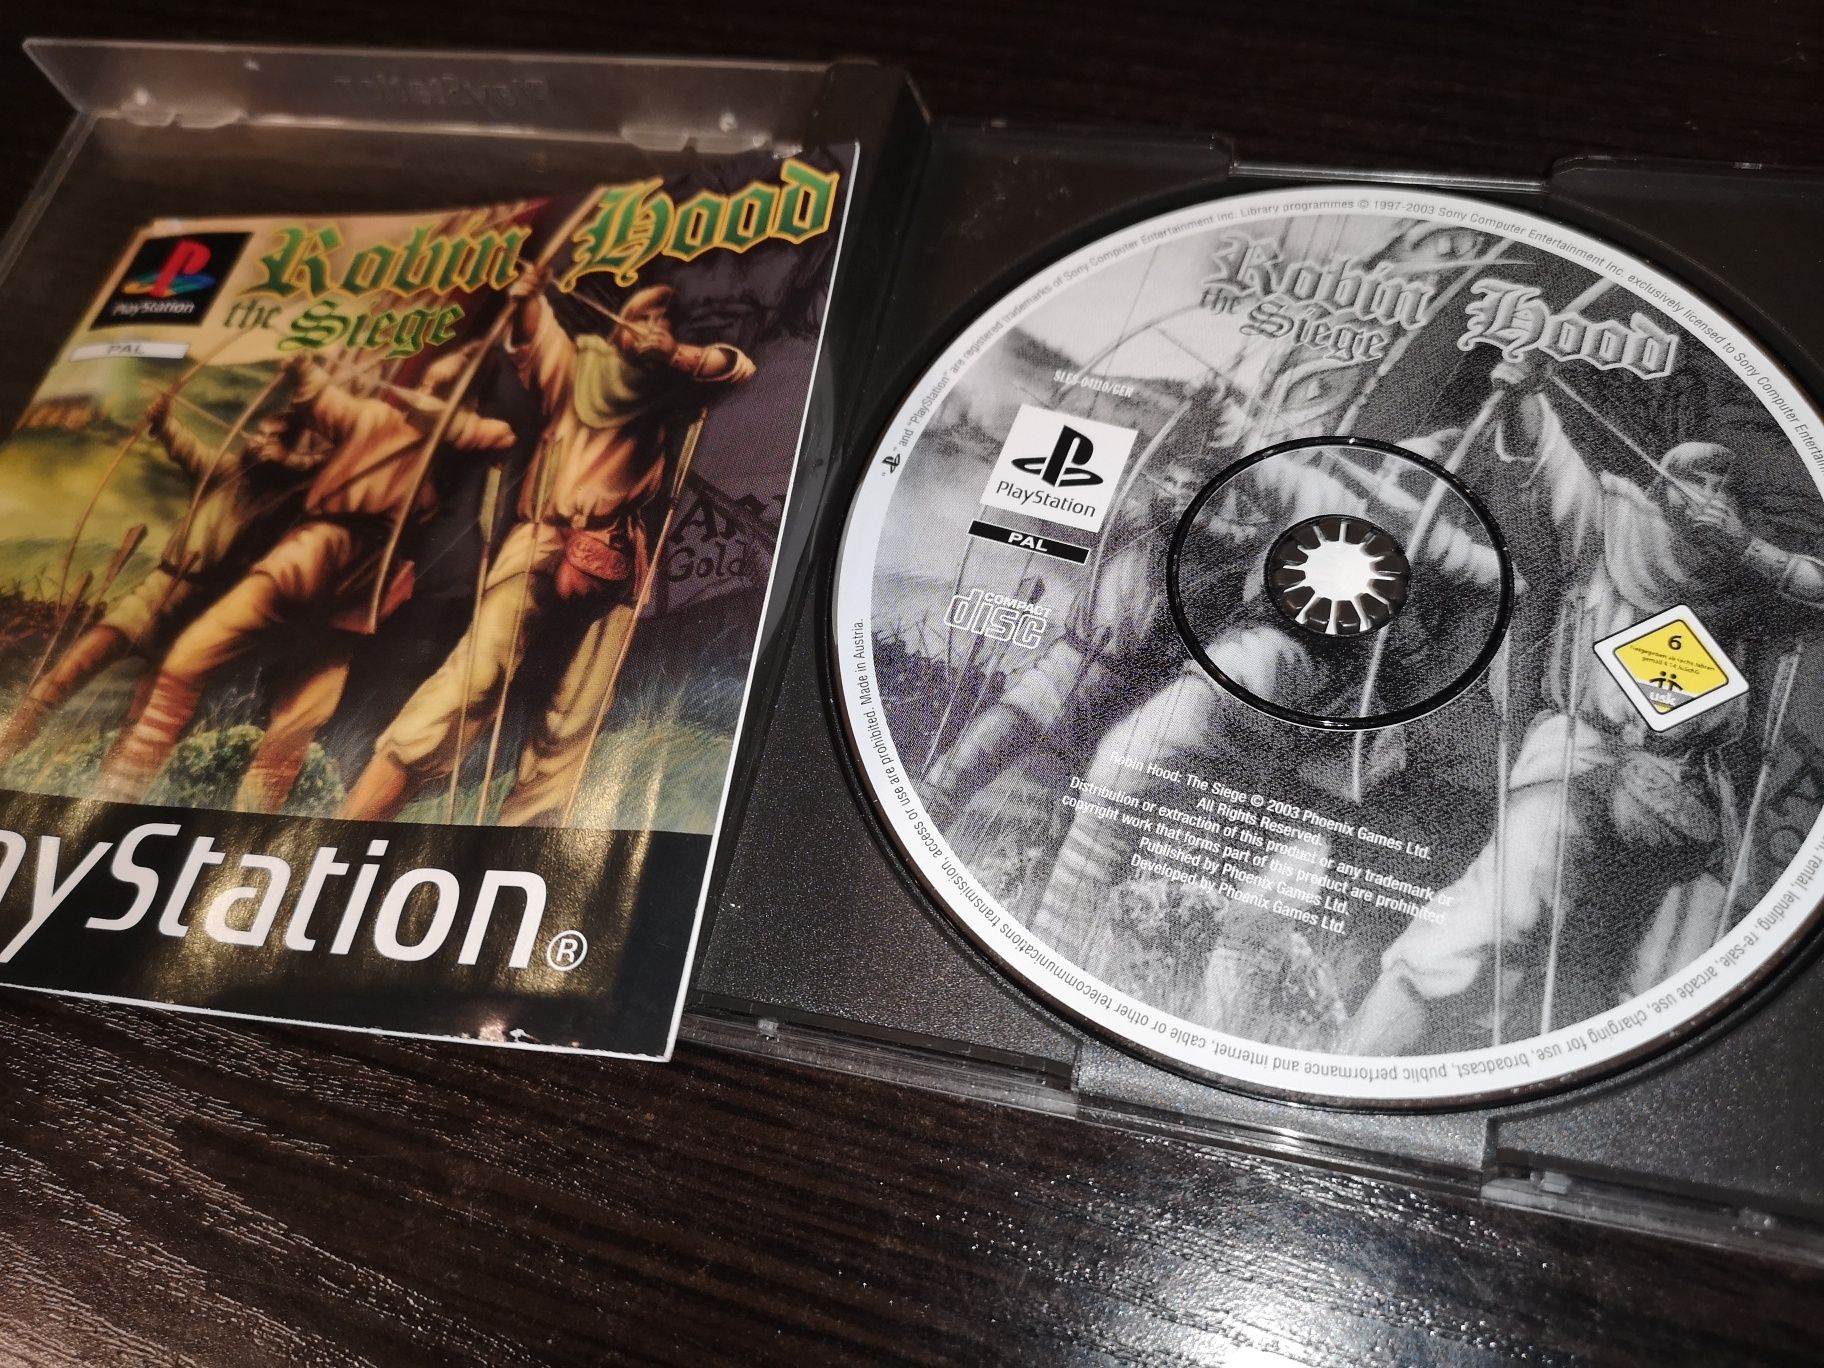 Robin Hood gra PSX PS1 (jedyna na rynku) Biały kruk